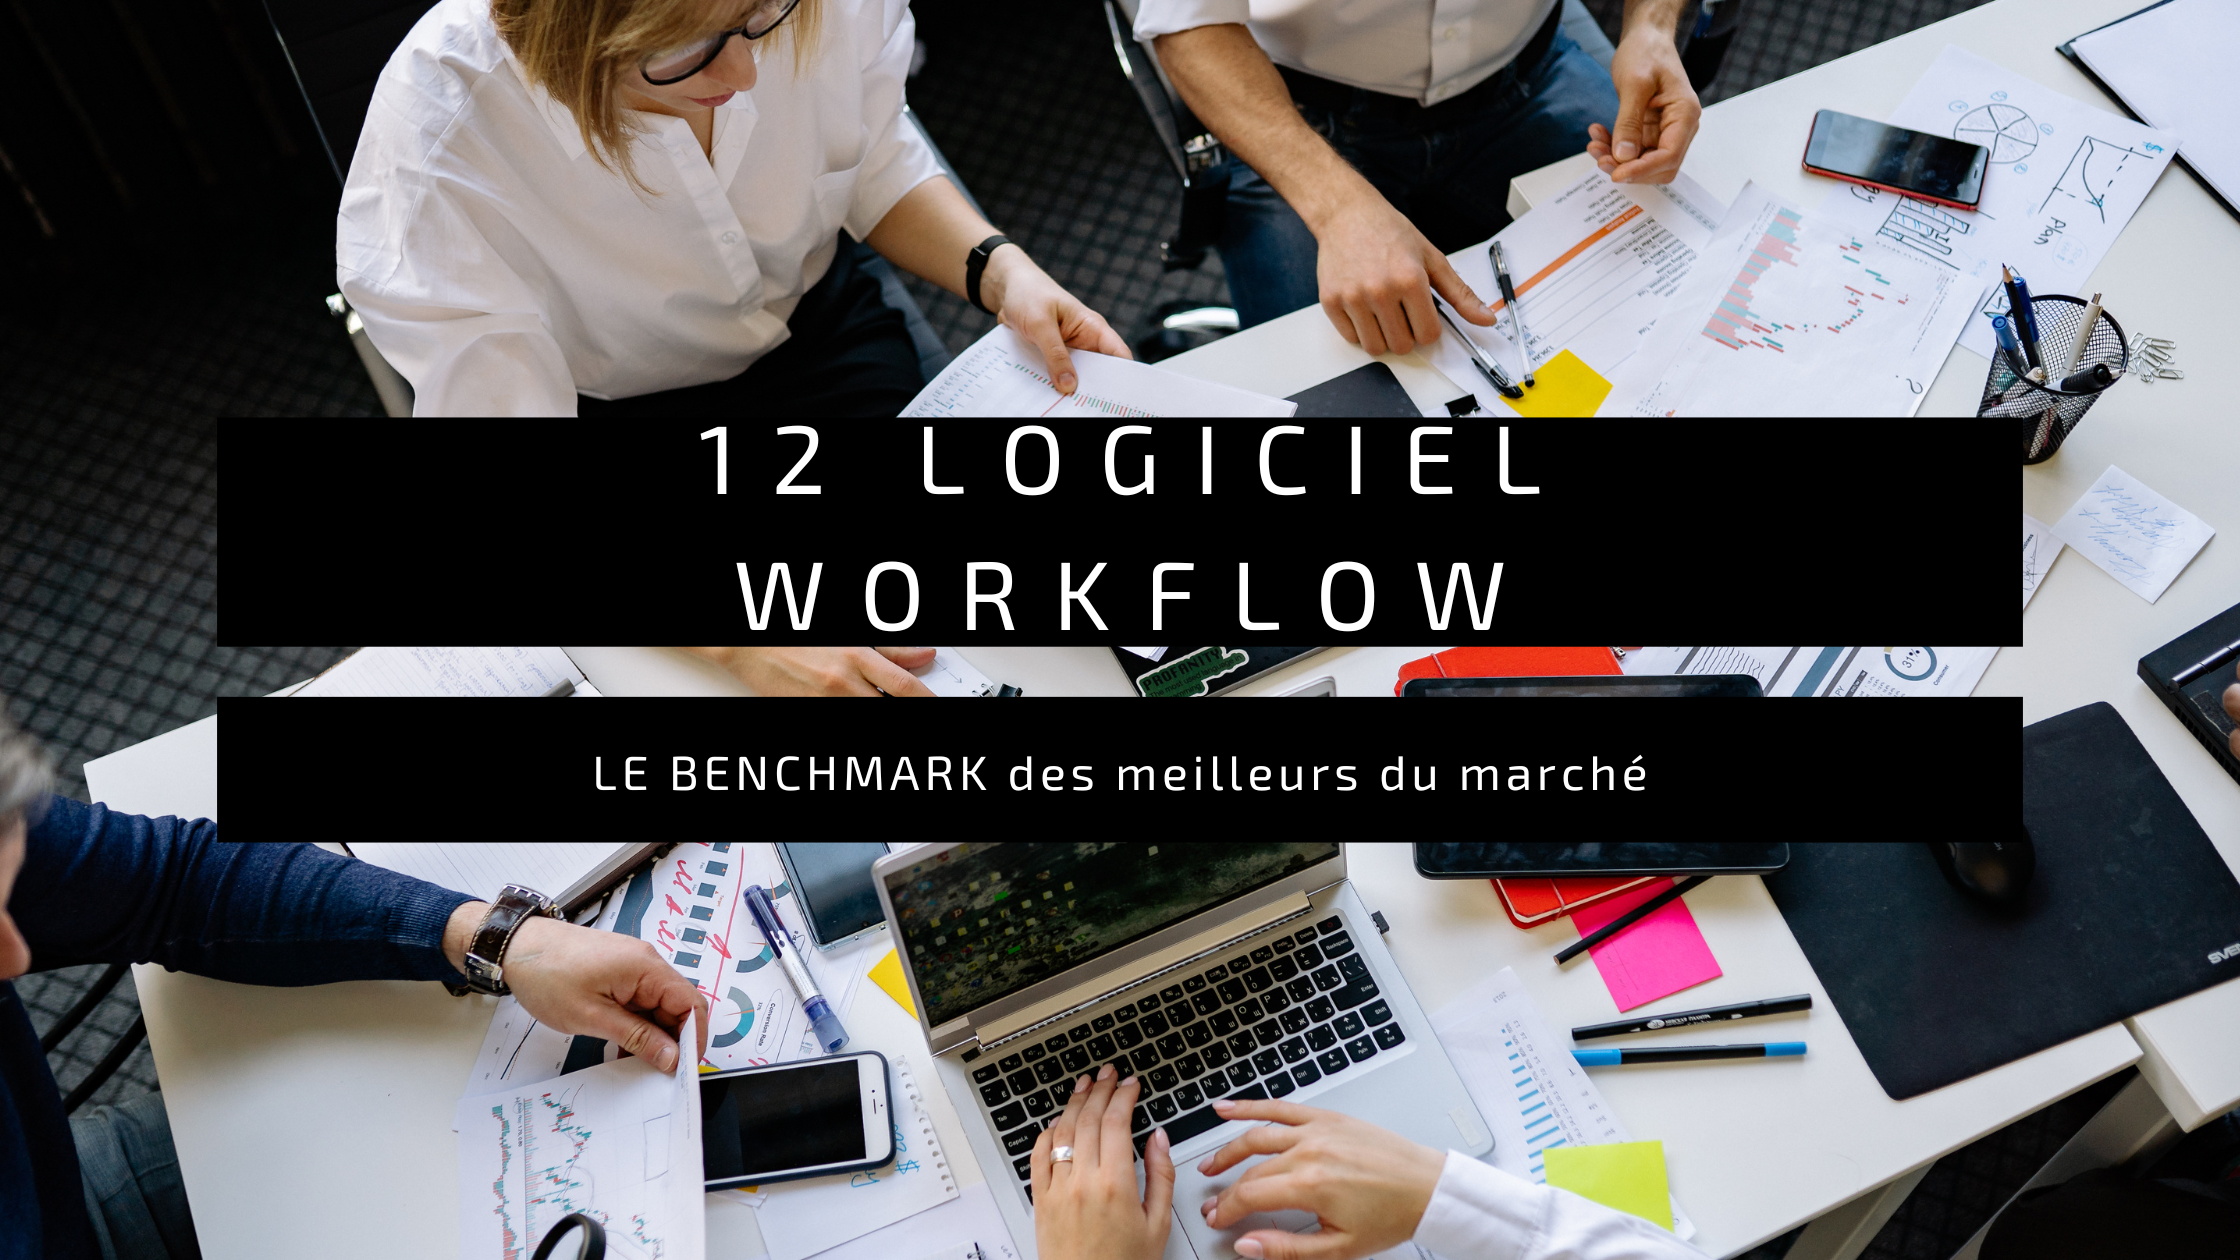 12 meilleur logiciel workflow